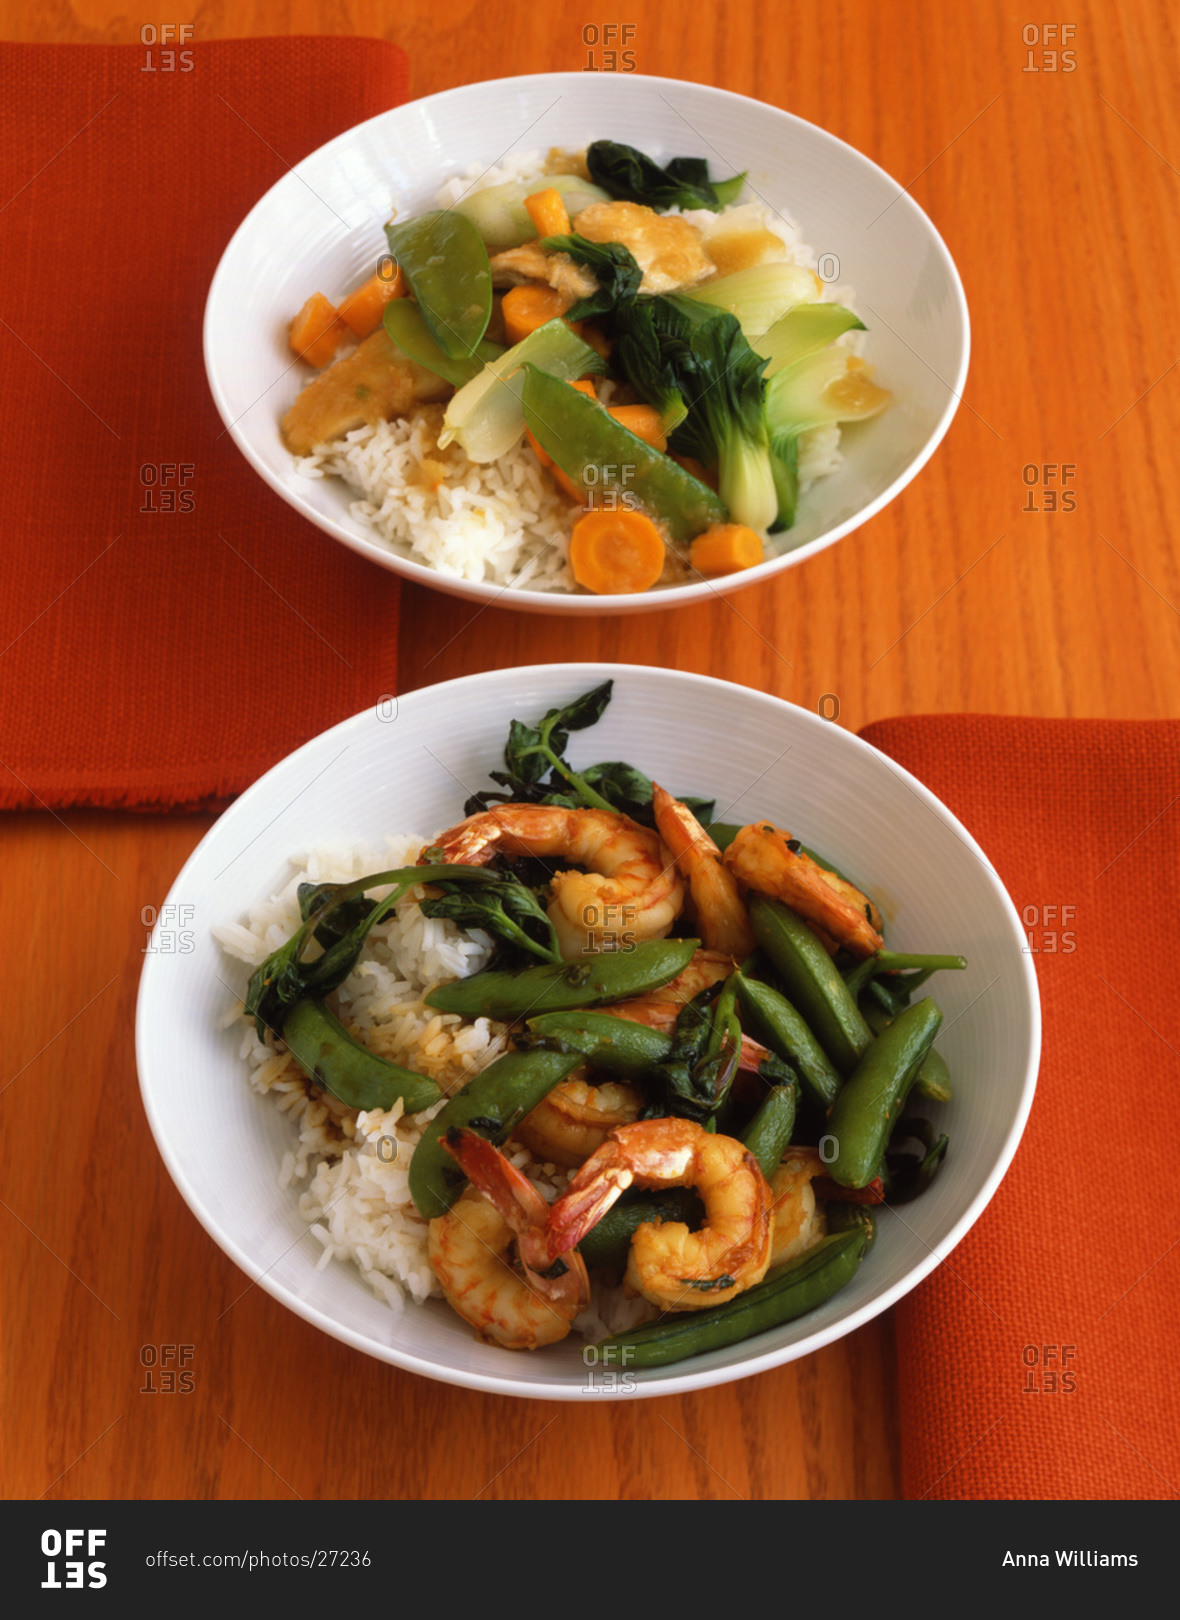 Shrimp and vegetable stir fry with snow peas, carrots, pak choi and jasmine rice